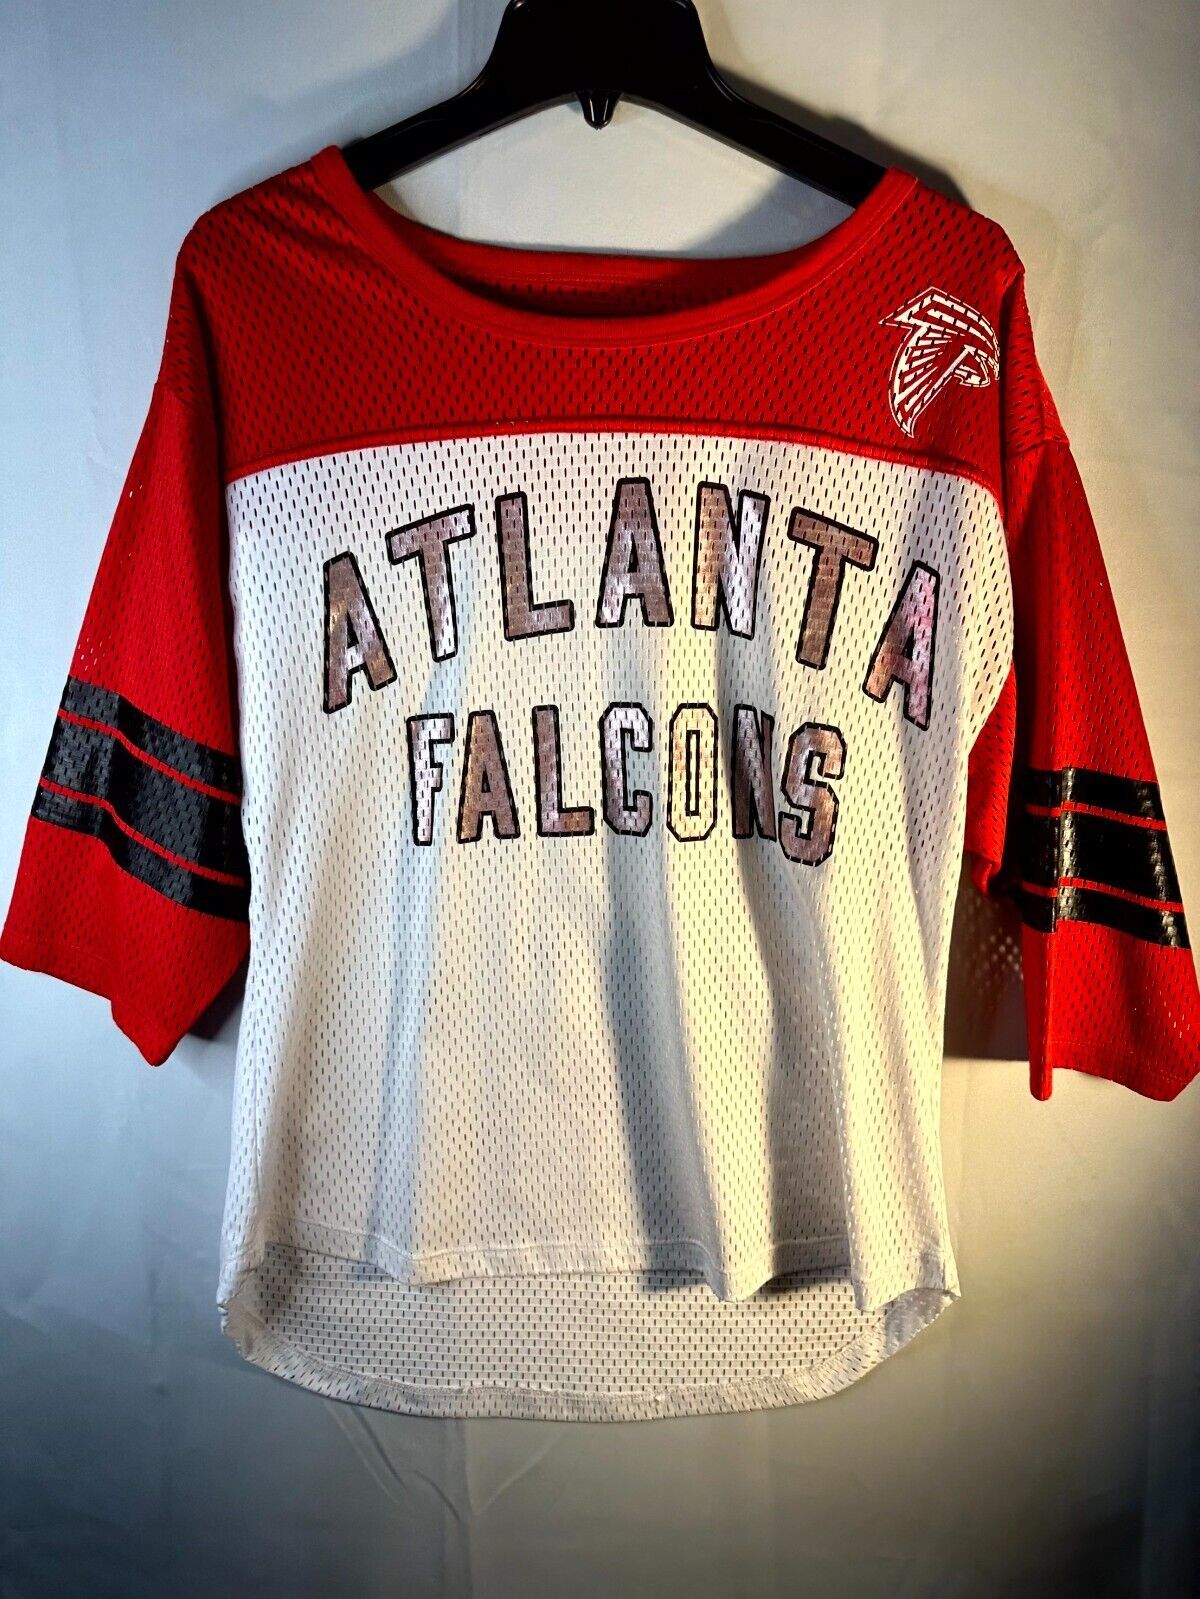 Primary image for Atlanta Women Falcons 3/4 Sleeve NFL Team Apparel Mesh Top Jersey Red SZ Medium